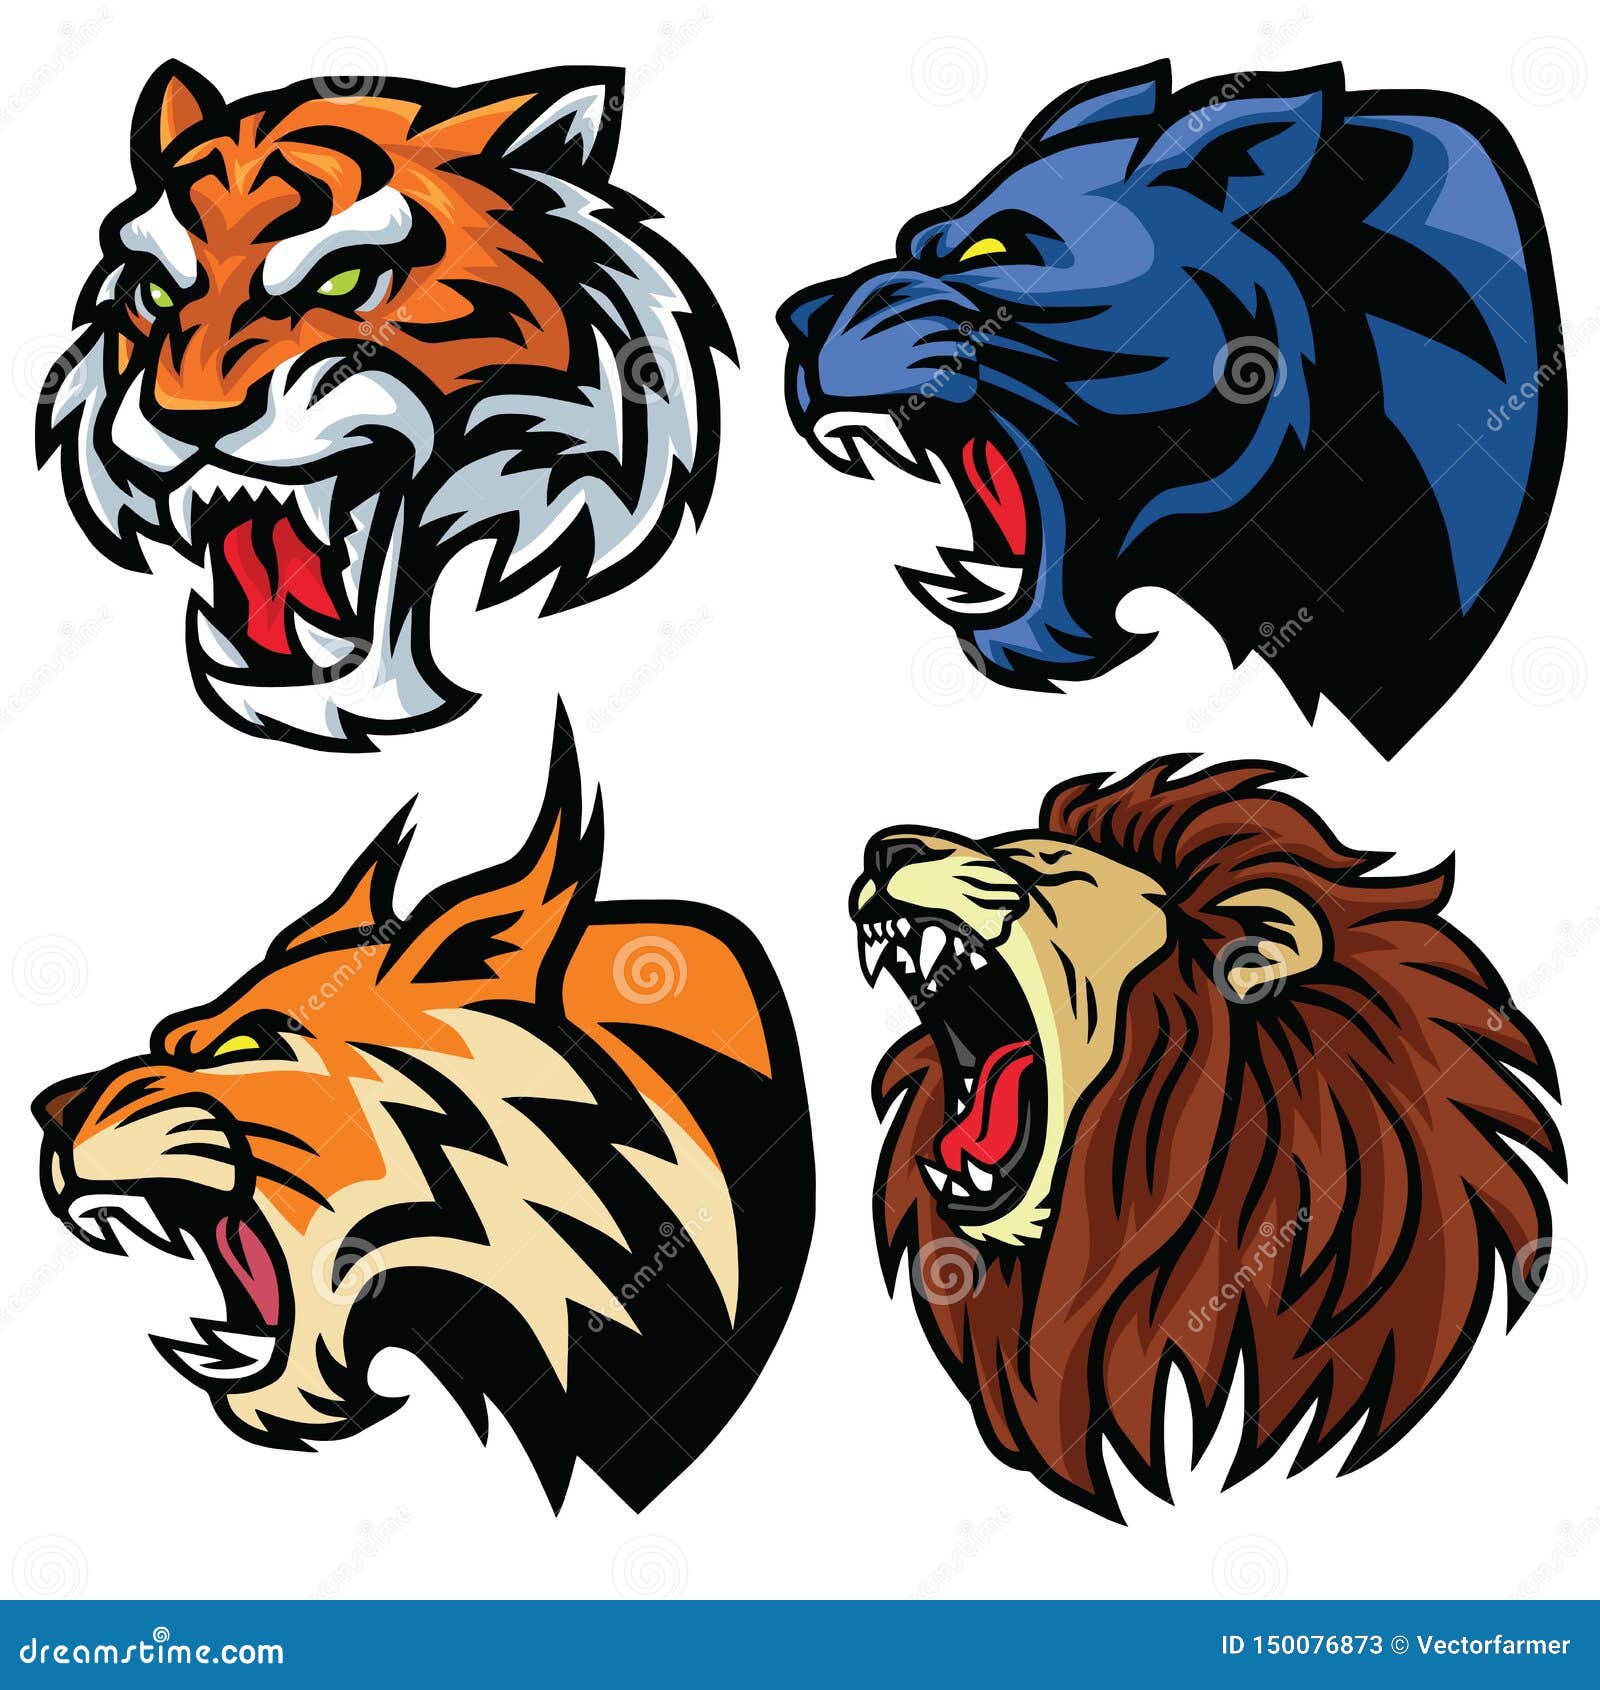 Lion Head Face Wild Animal Wildlife Jungle Cartoon School Team Sport Mascot Tattoo Art Company Design Logo SVG PNG Clipart Vector Cut File